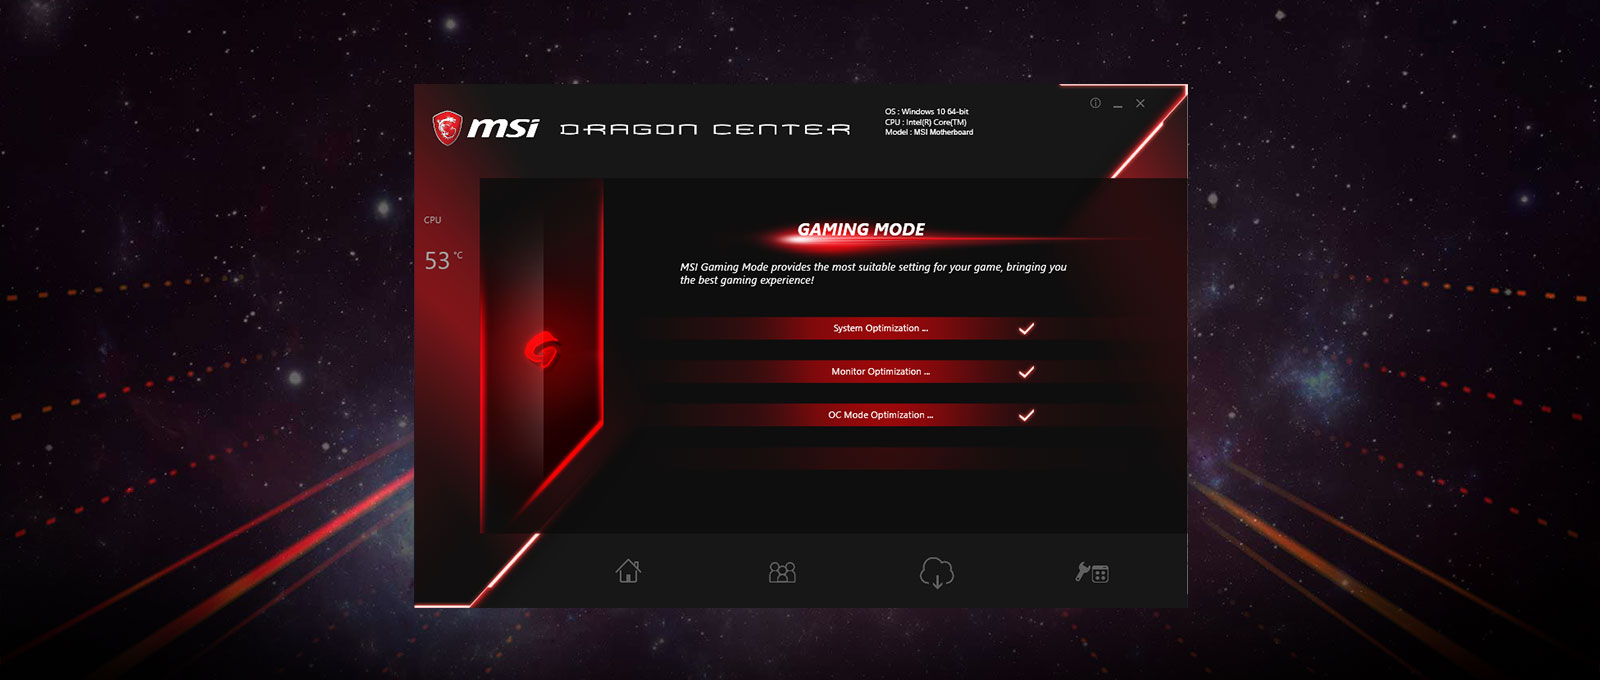 MSI Dragon Center User Interface.